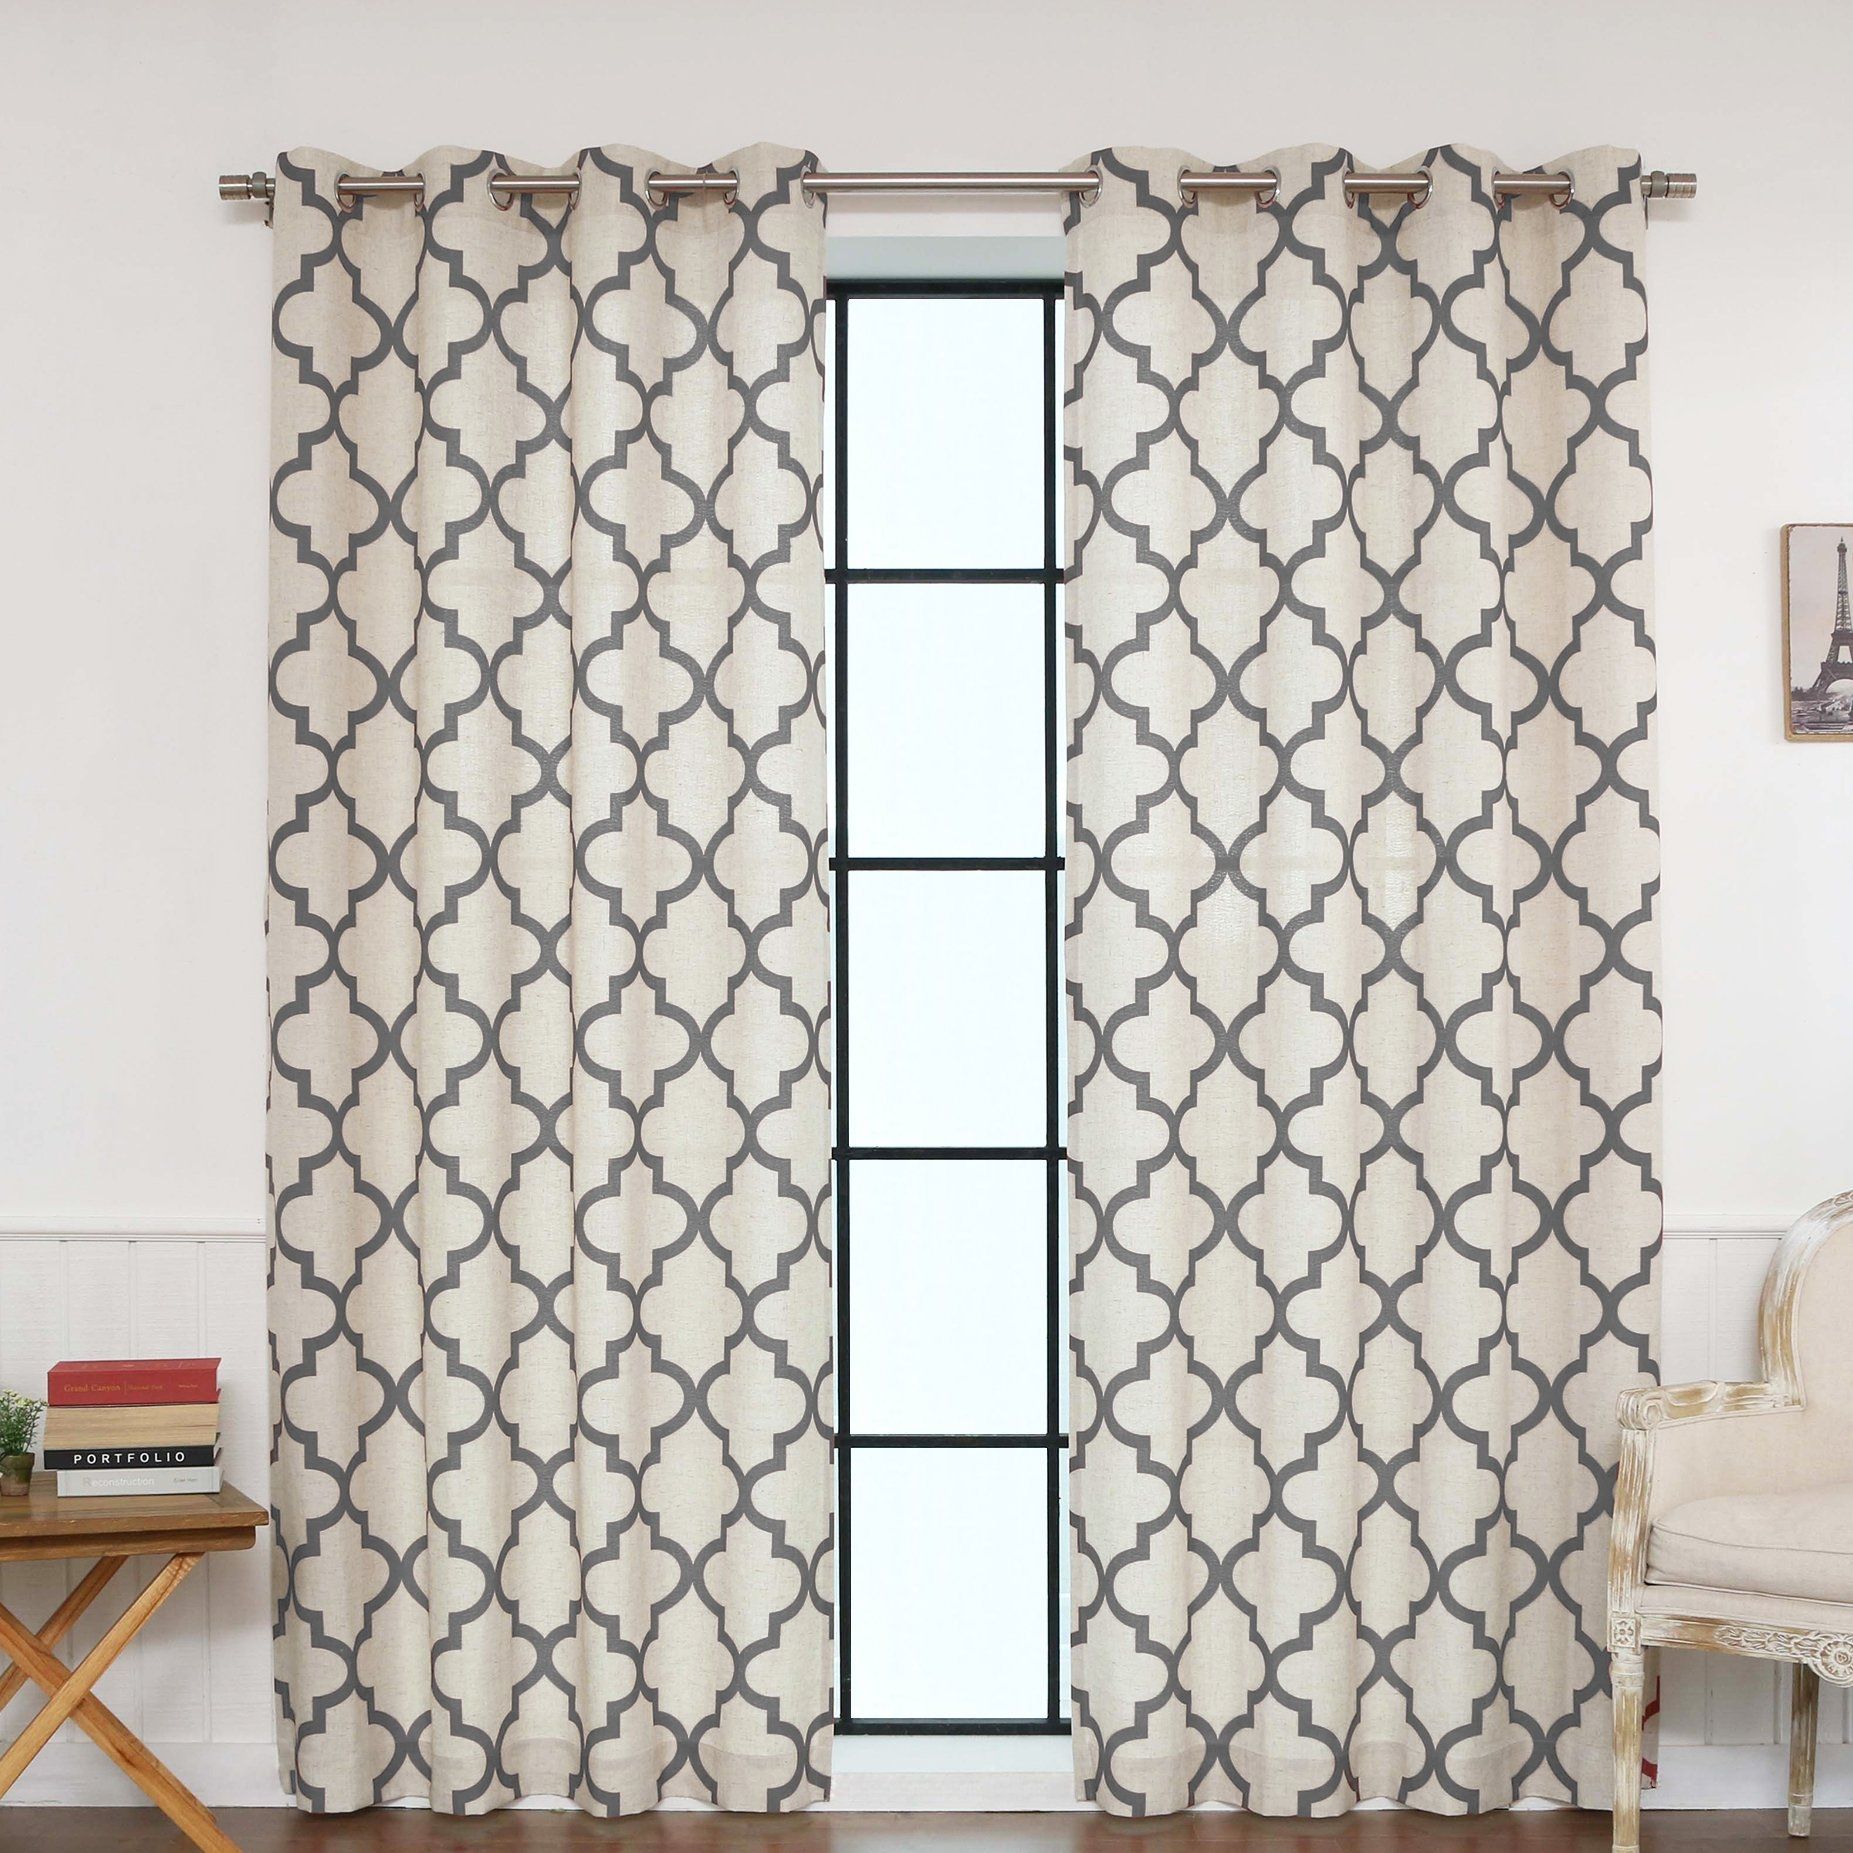 Red Barrel Studio Lakewood Moroccan Tile Curtain Panels Reviews Inside Moroccan Tile Curtains (View 4 of 15)